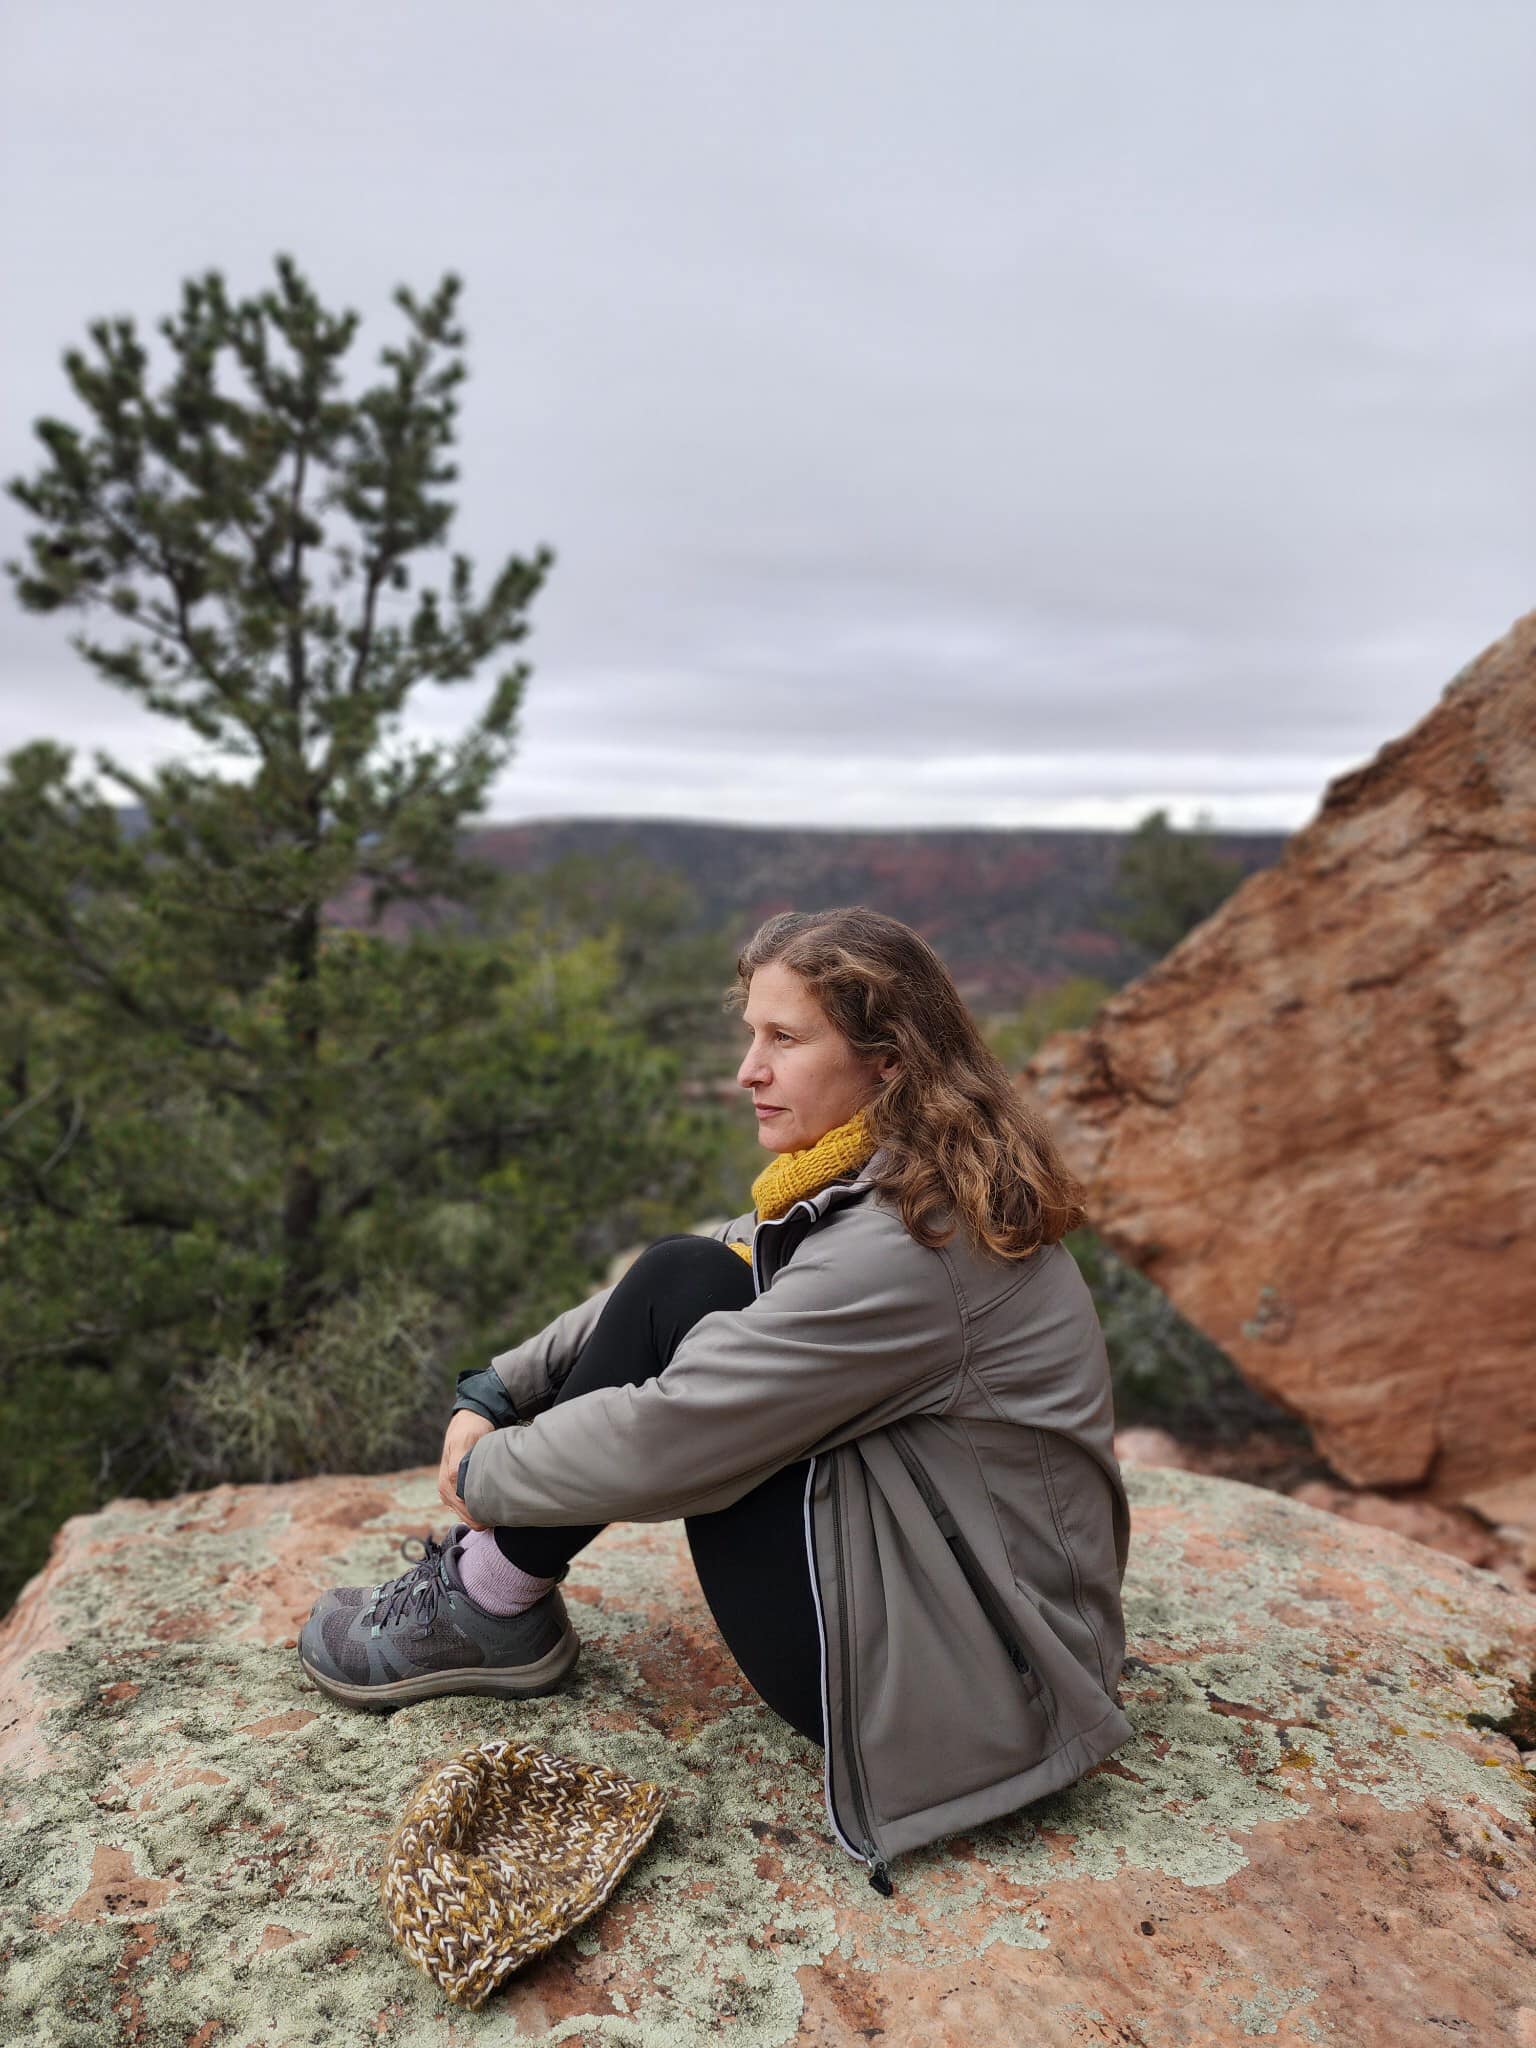 Stephanie Singer sits on rocky cliffside overlooking landscape.